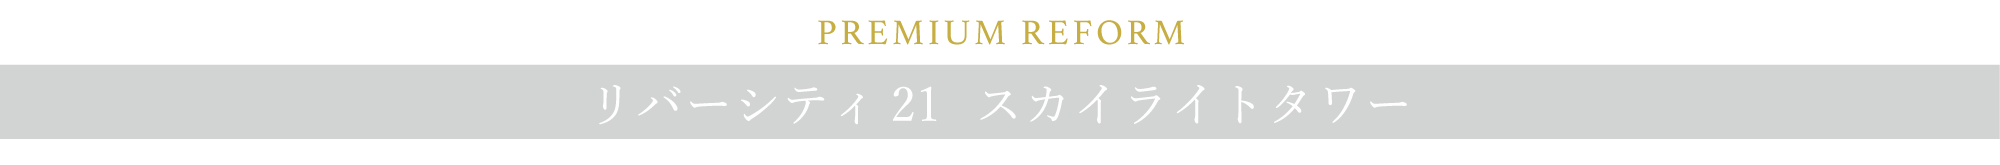 PREMIUM REFORM リバーシティ21　スカイライトタワー